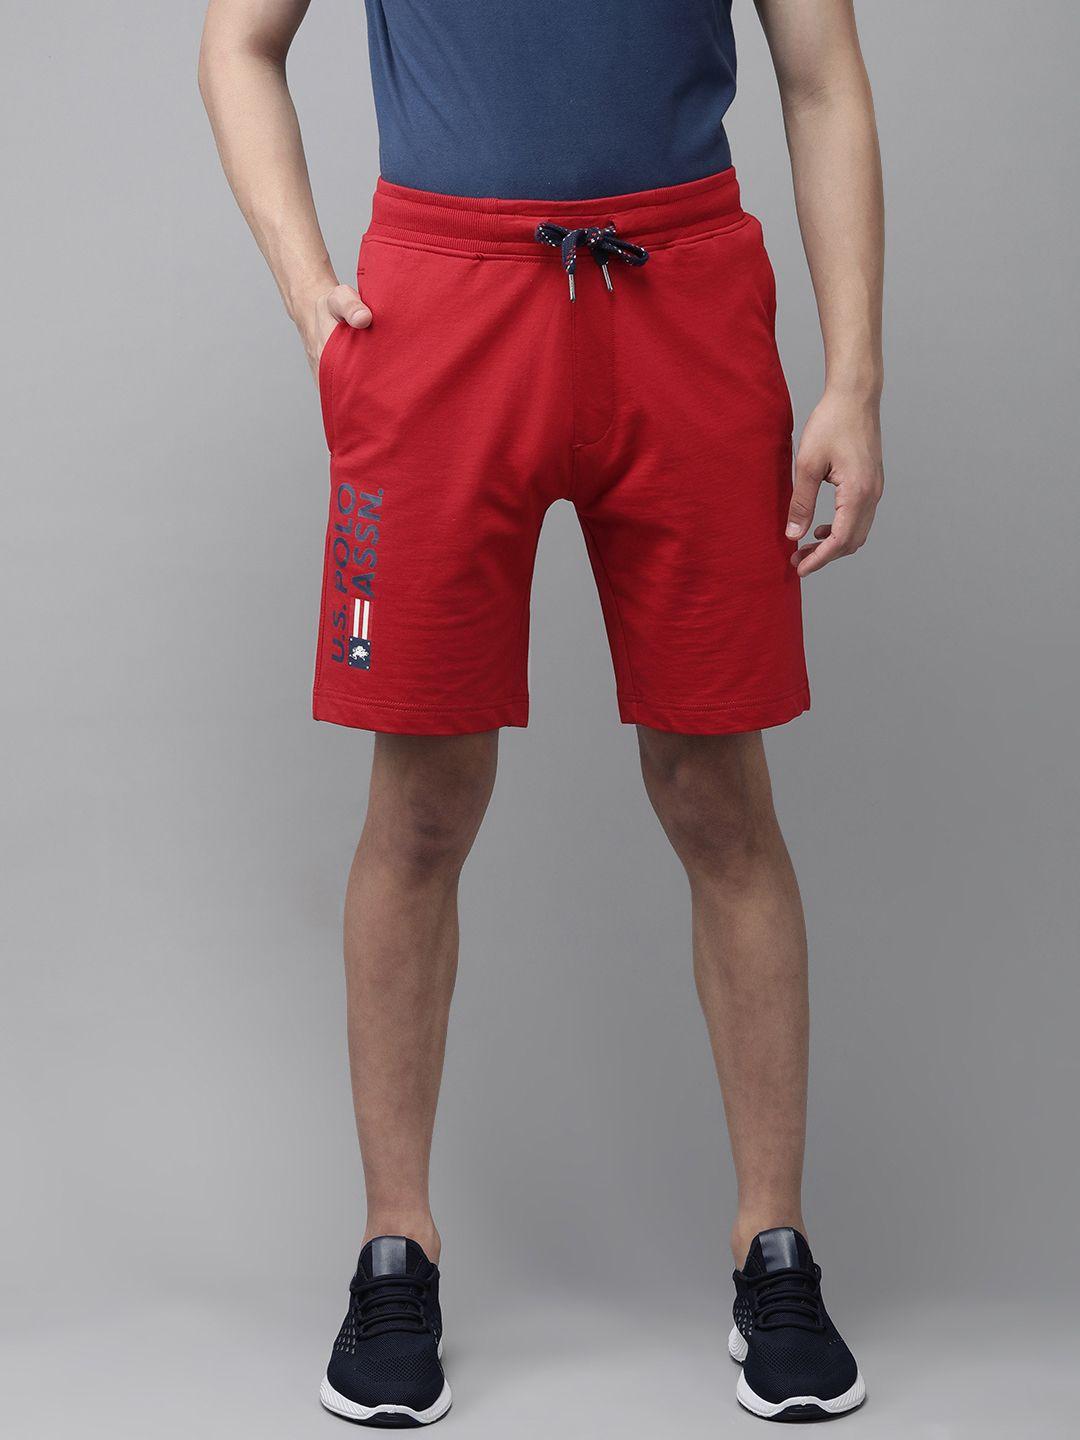 u.s. polo assn. men red printed regular shorts